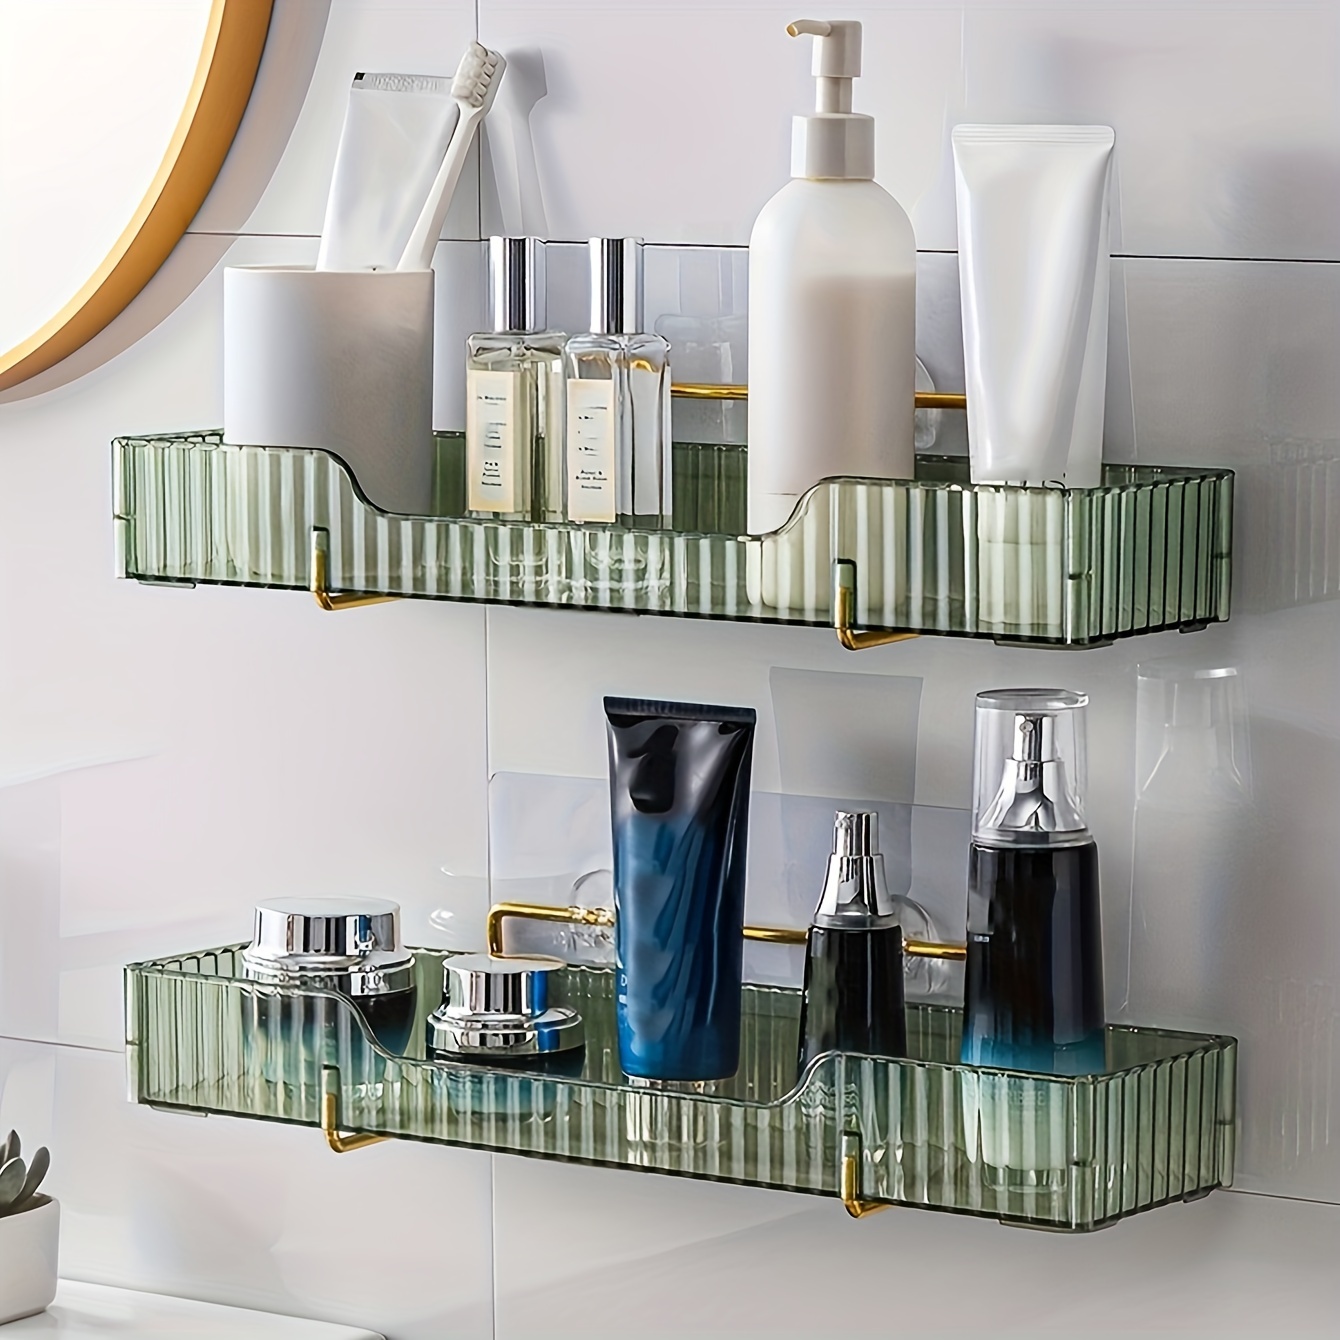 RnemiTe-amo Deals！Bathroom Shelf Wall Mounted, Floating Shelves, Adhesive  Shelf,Adhesive Display Shelf For Living Room Bedroom Bathroom Kitchen